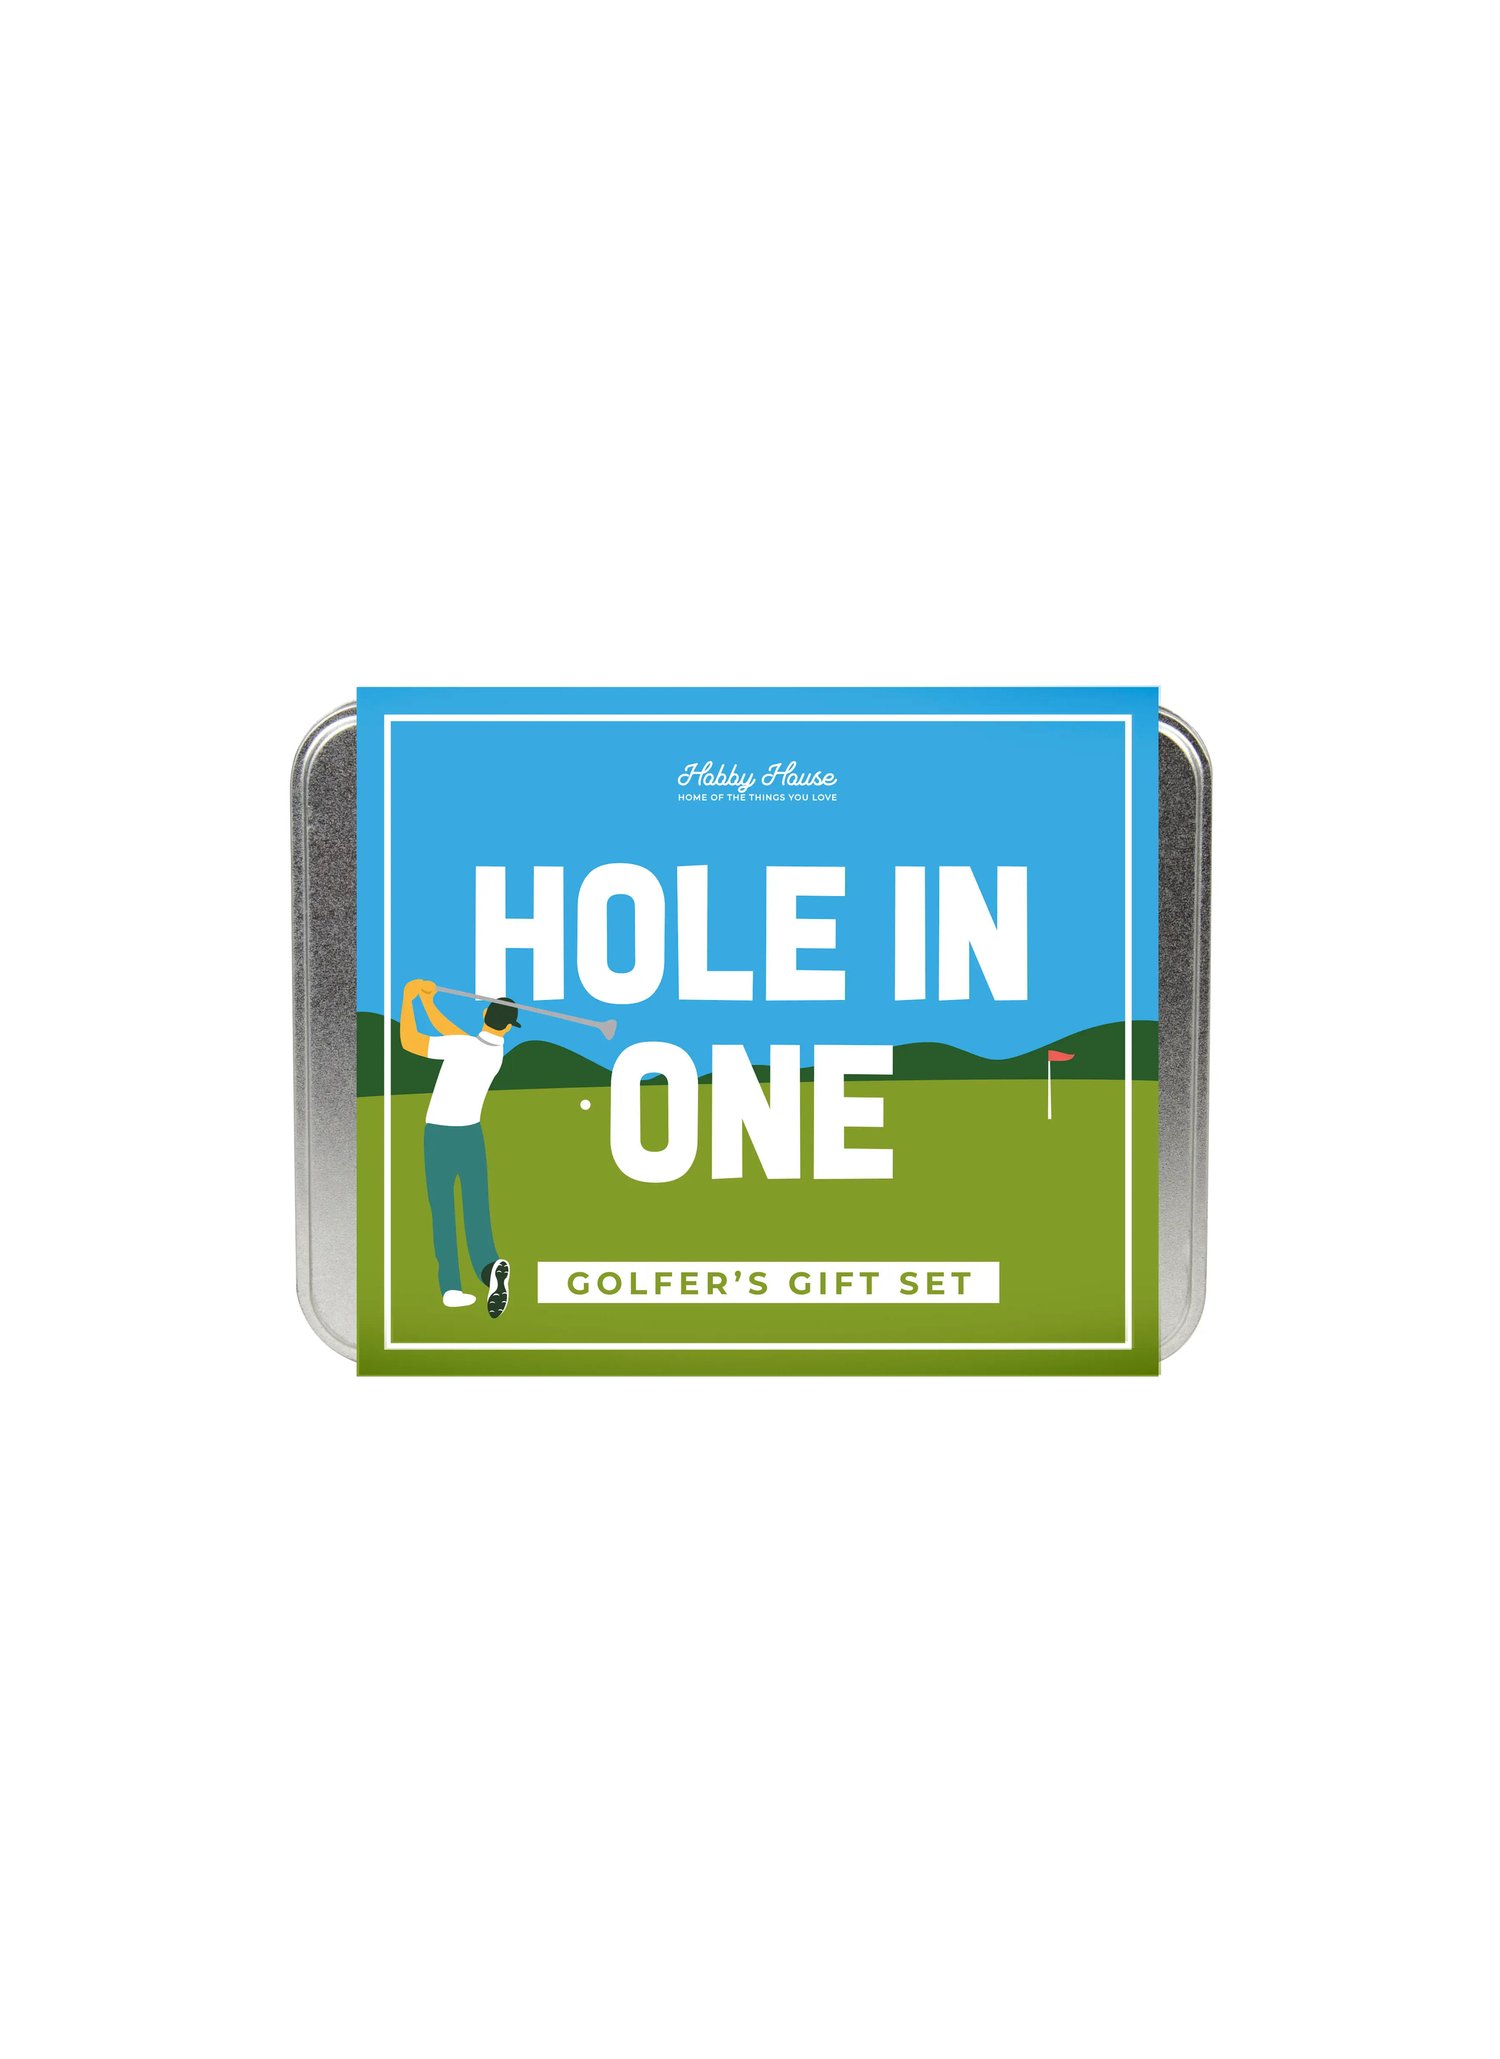 https://images.squarespace-cdn.com/content/v1/5cdc504cbb49a7000117a693/1659296437799-VKEEDXDY27GIK7XX5S1B/Hole+In+One+Golfer%27s+Gift+Set+Tin.jpg?format=1500w